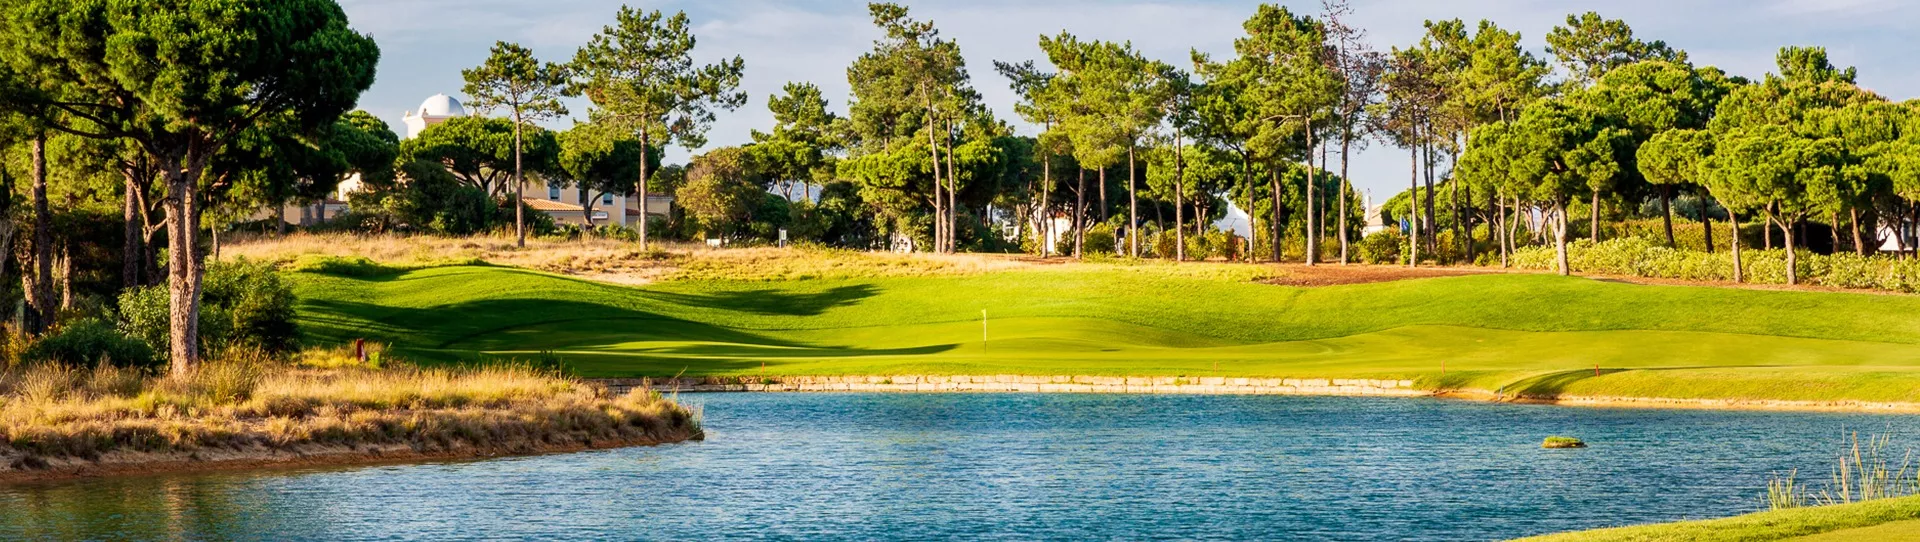 Portugal golf holidays - Quinta do Lago Golf Delight - Photo 1